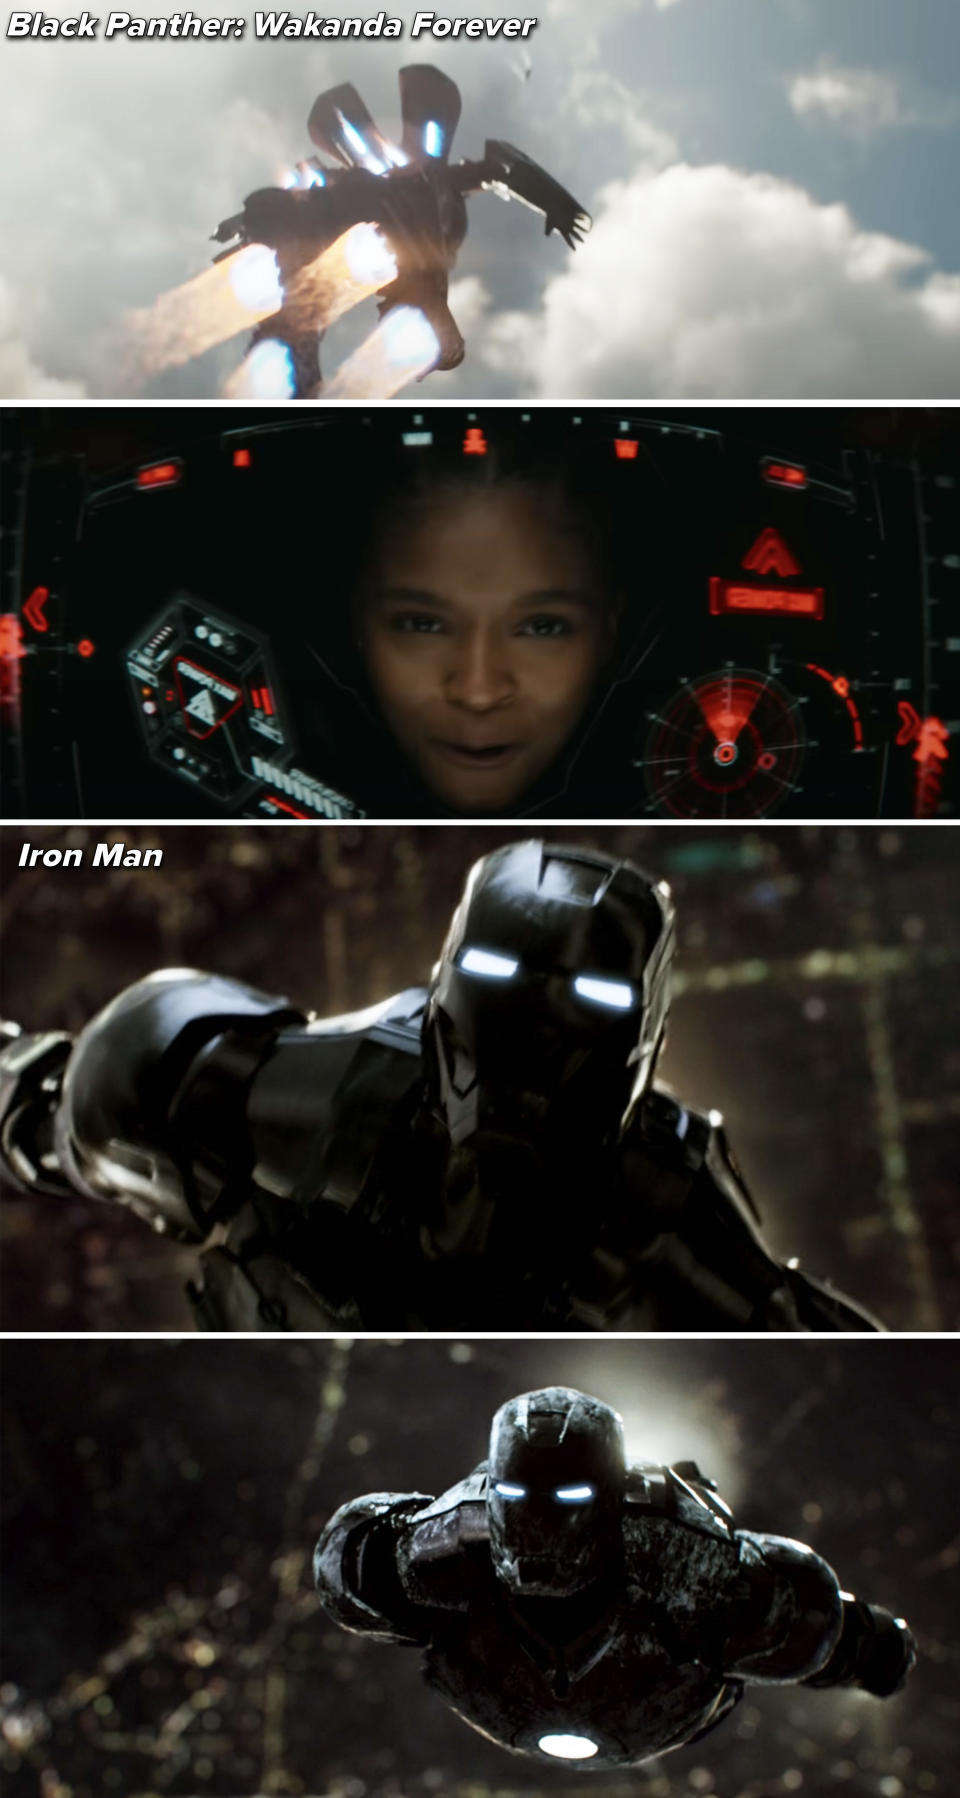 Screenshots from "Black Panther: Wakanda Forever"